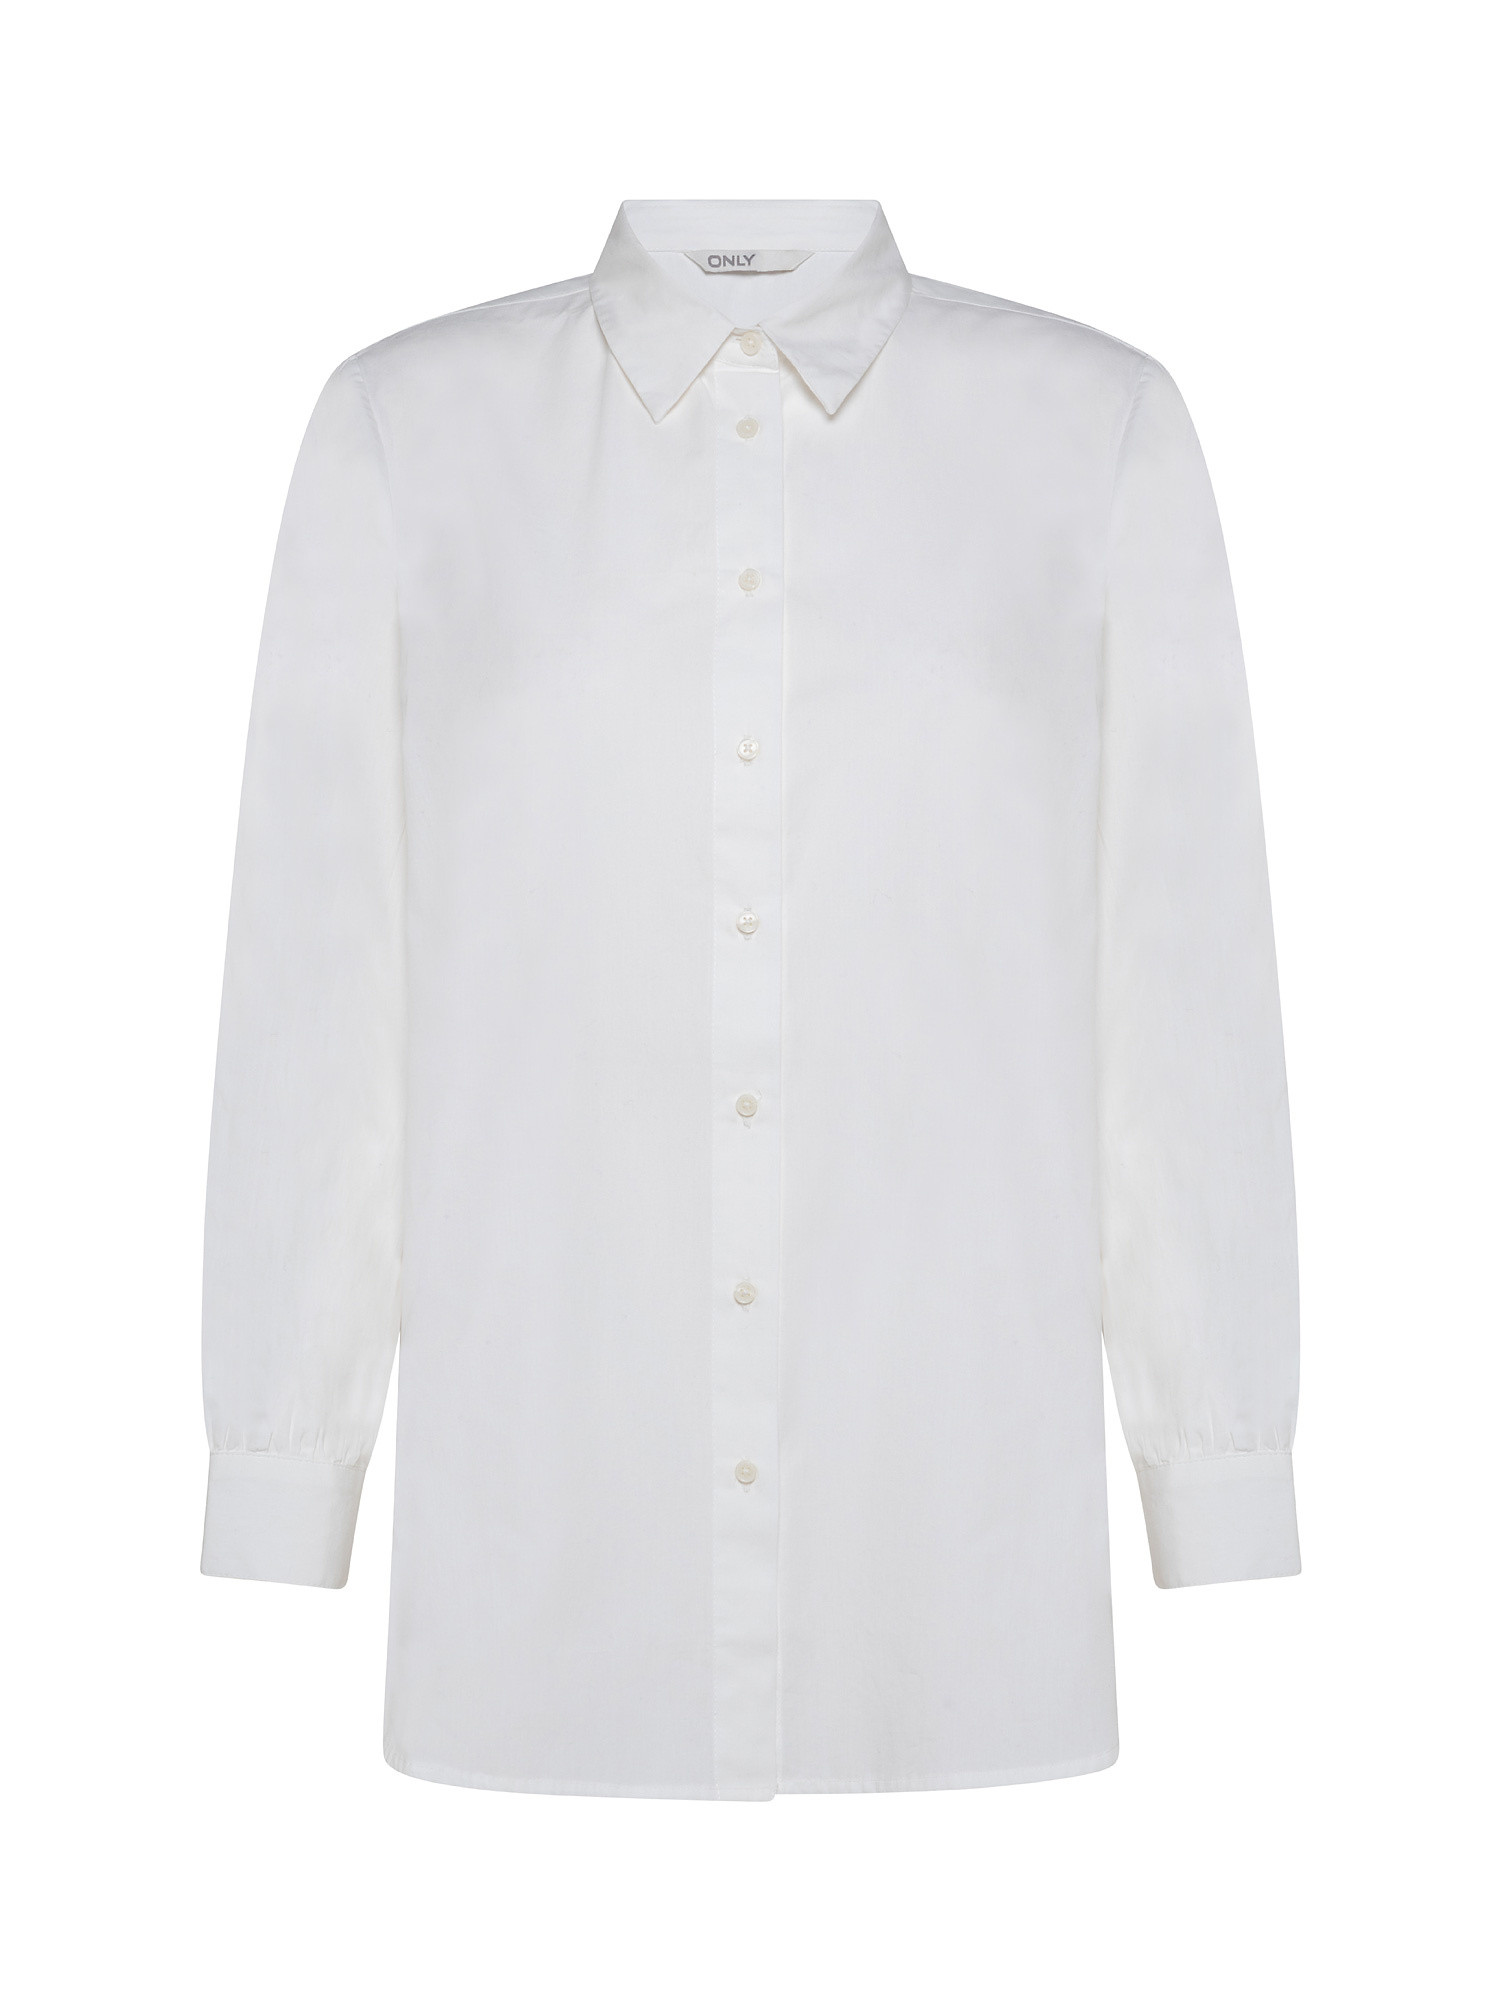 Classic shirt, White, large image number 0